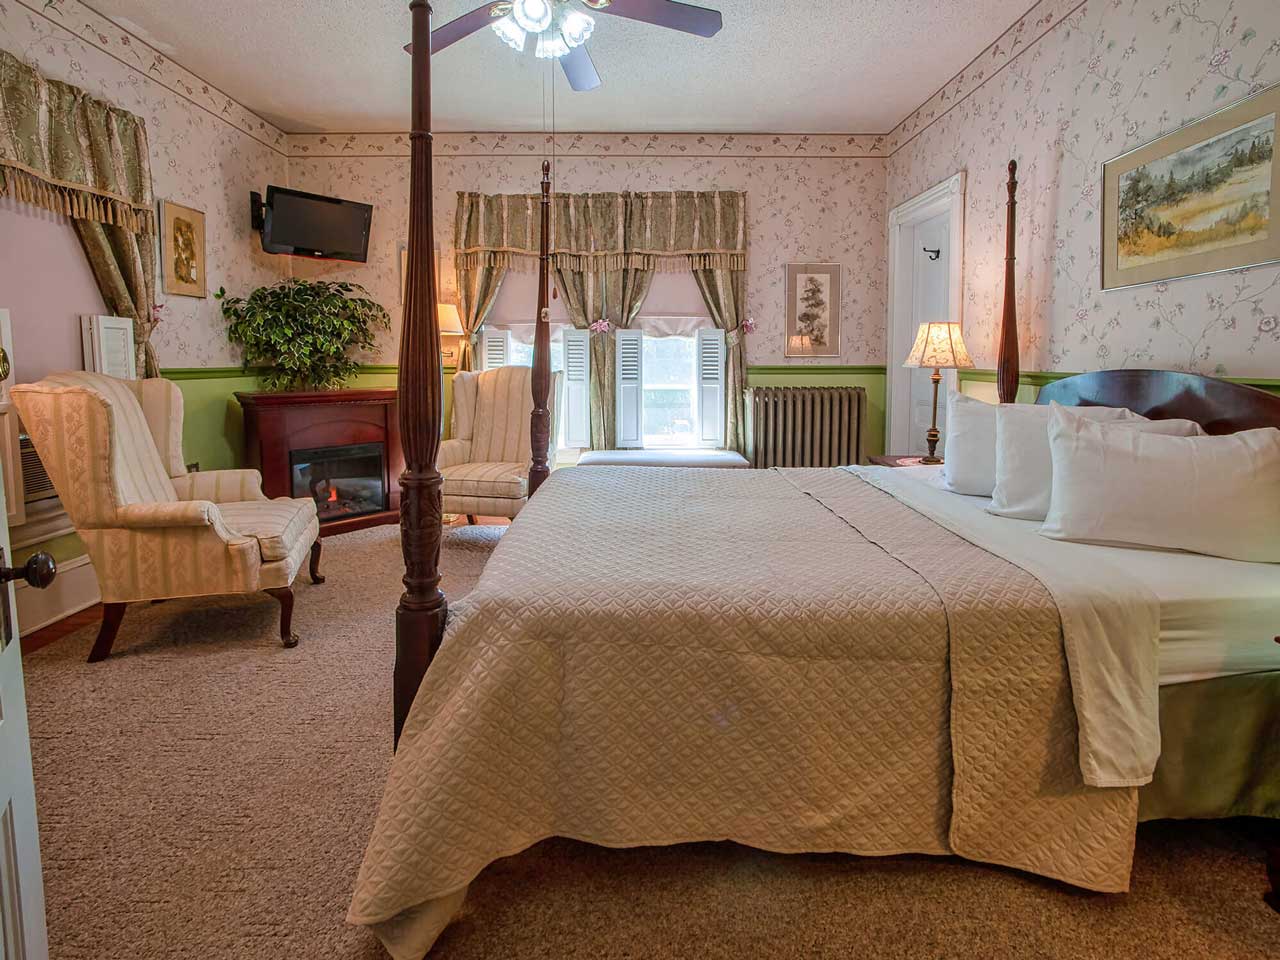 Magnolia Bedroom - Inn on Maple Street, Port Allegany, PA